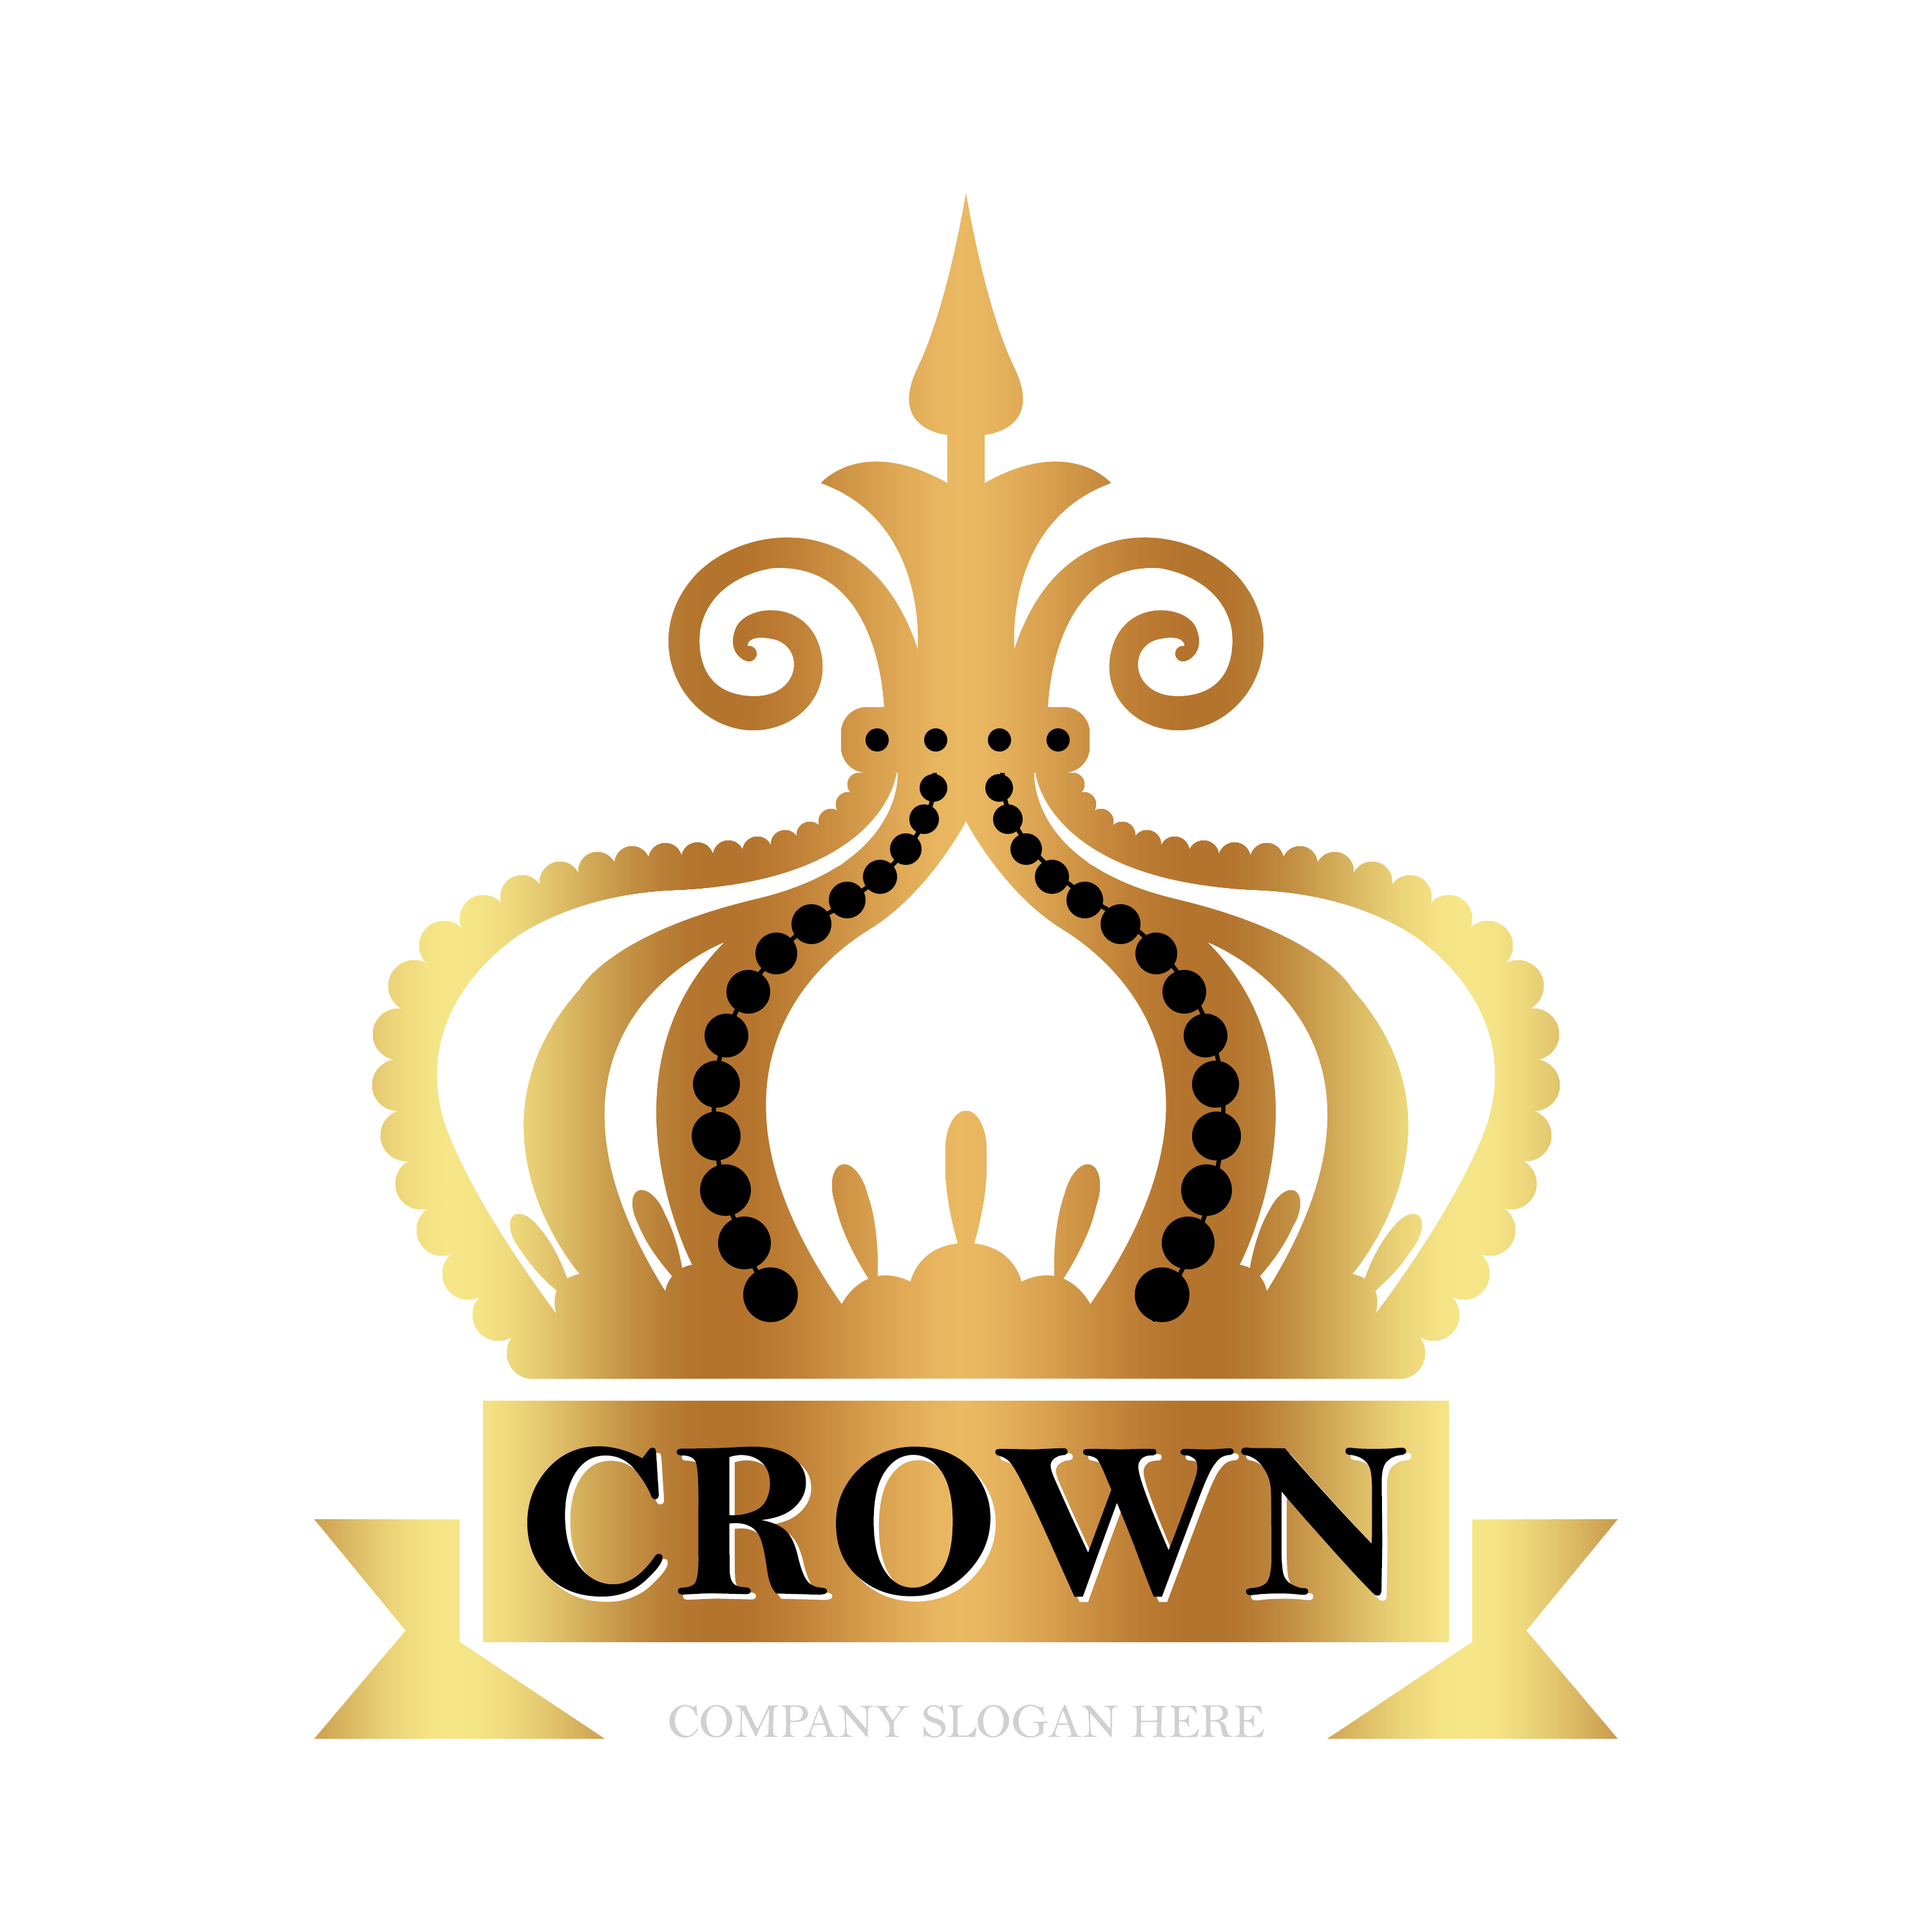 Royal Logo Design Png